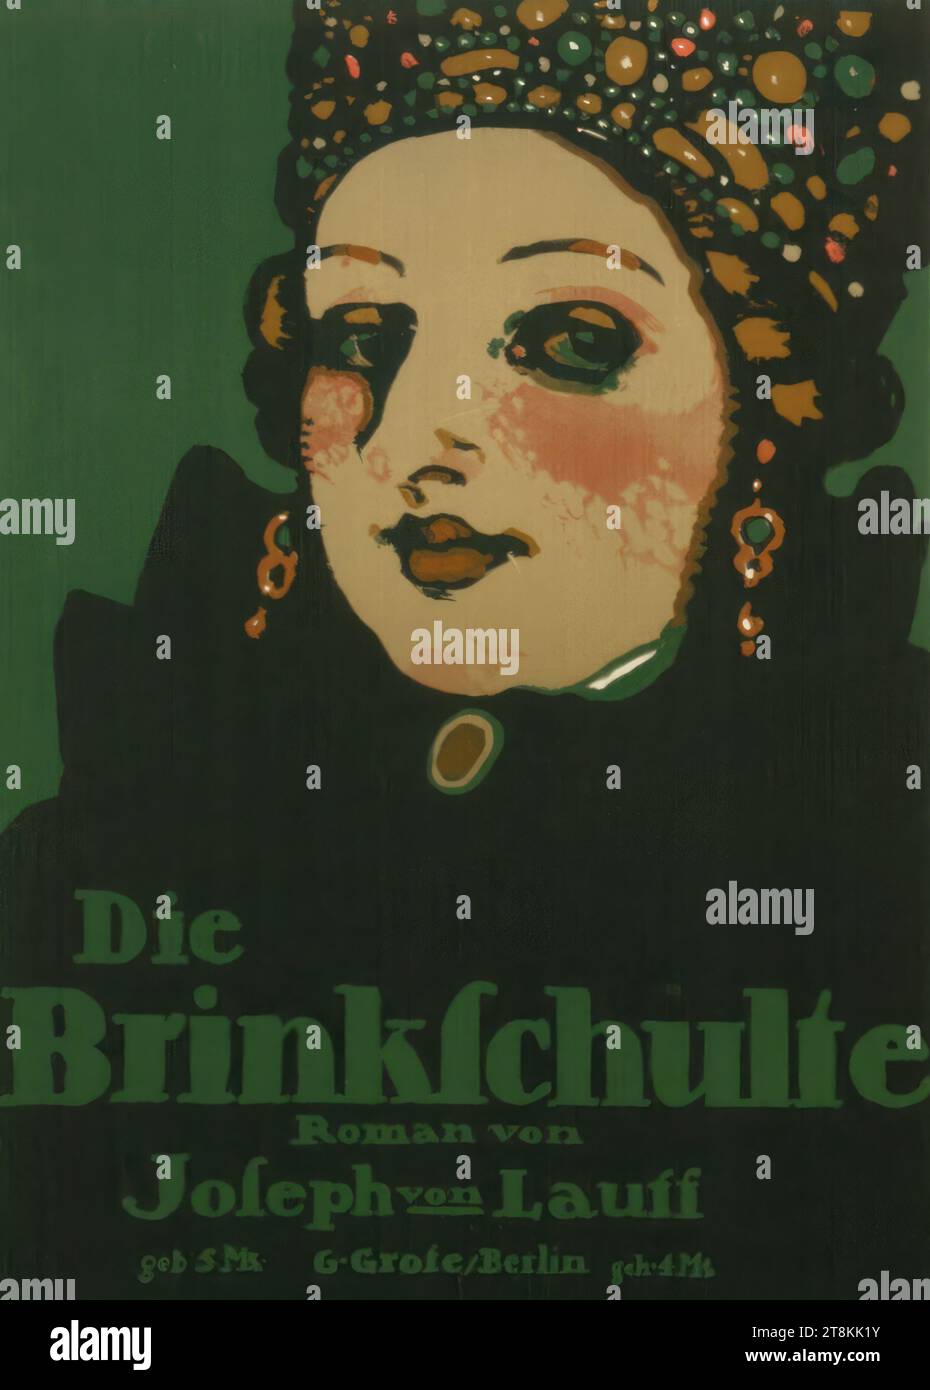 The Brinkschulte; novel by Joseph von Lauff; G. Grote/Berlin, Paul Scheurich, New York 1883 - 1945 Brandenburg an der Havel, 1913, print, color lithograph, sheet: 450 mm x 310 mm Stock Photo